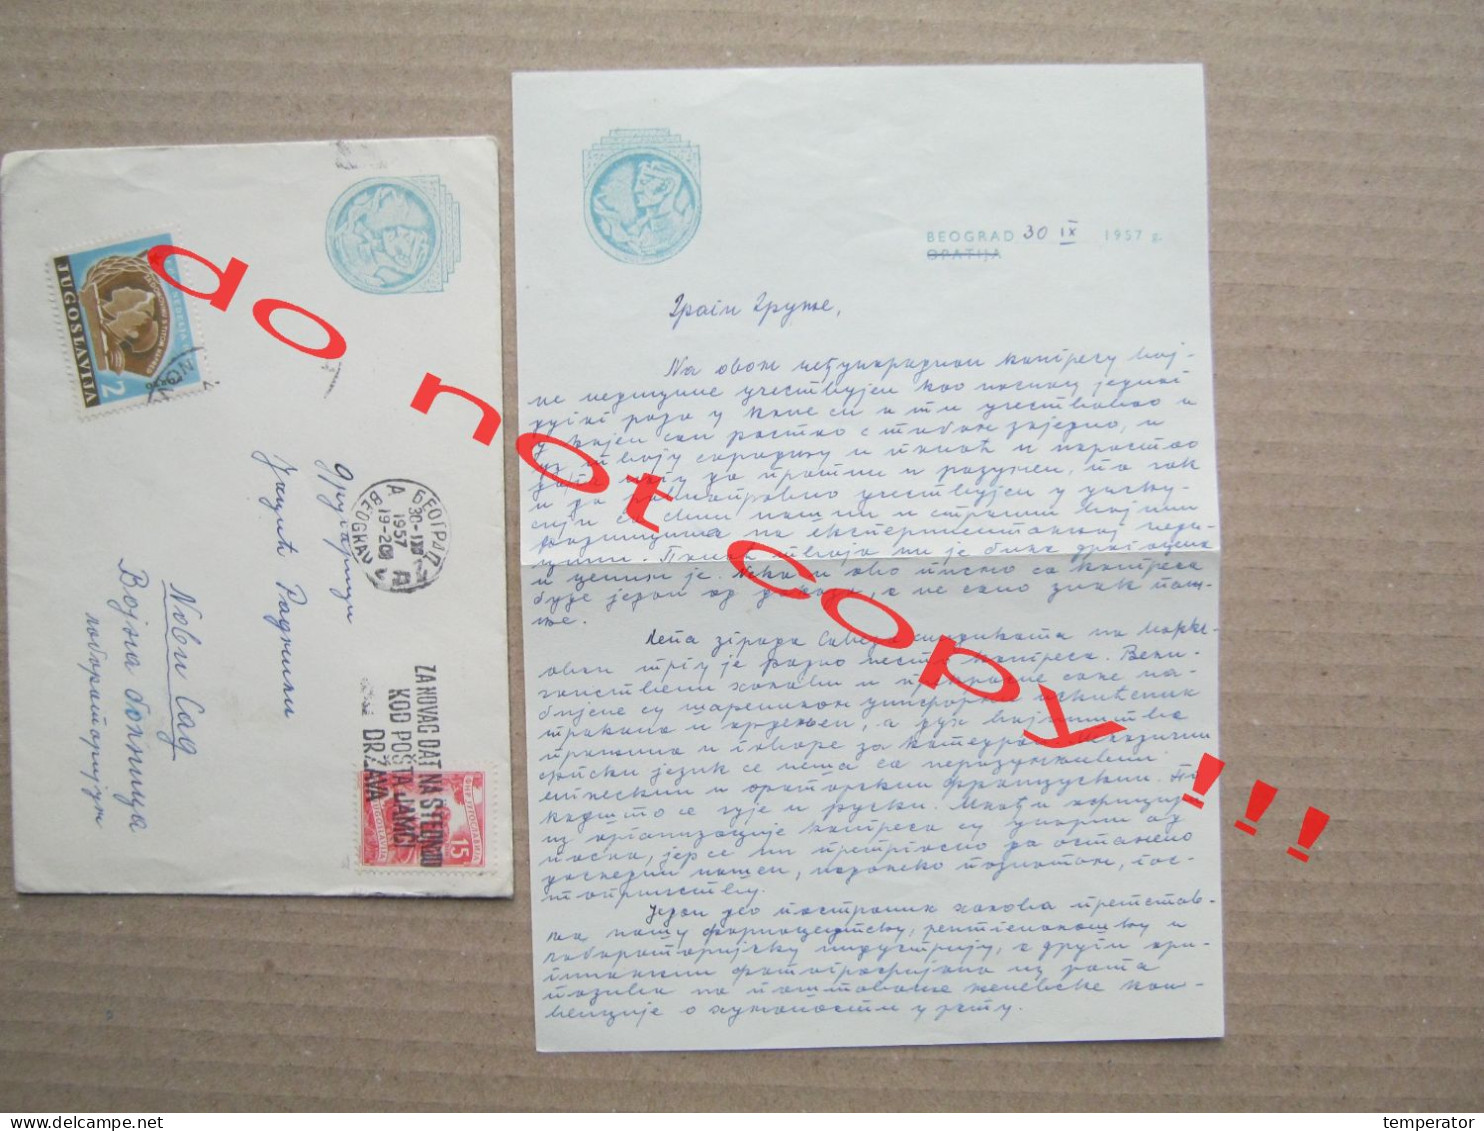 Yugoslavia Beograd / Envelope With Contents, Same Stamp Or Seal - Medjunarodni Kongres Vojne Medicine ( 1957 ) RARE !!!? - Covers & Documents